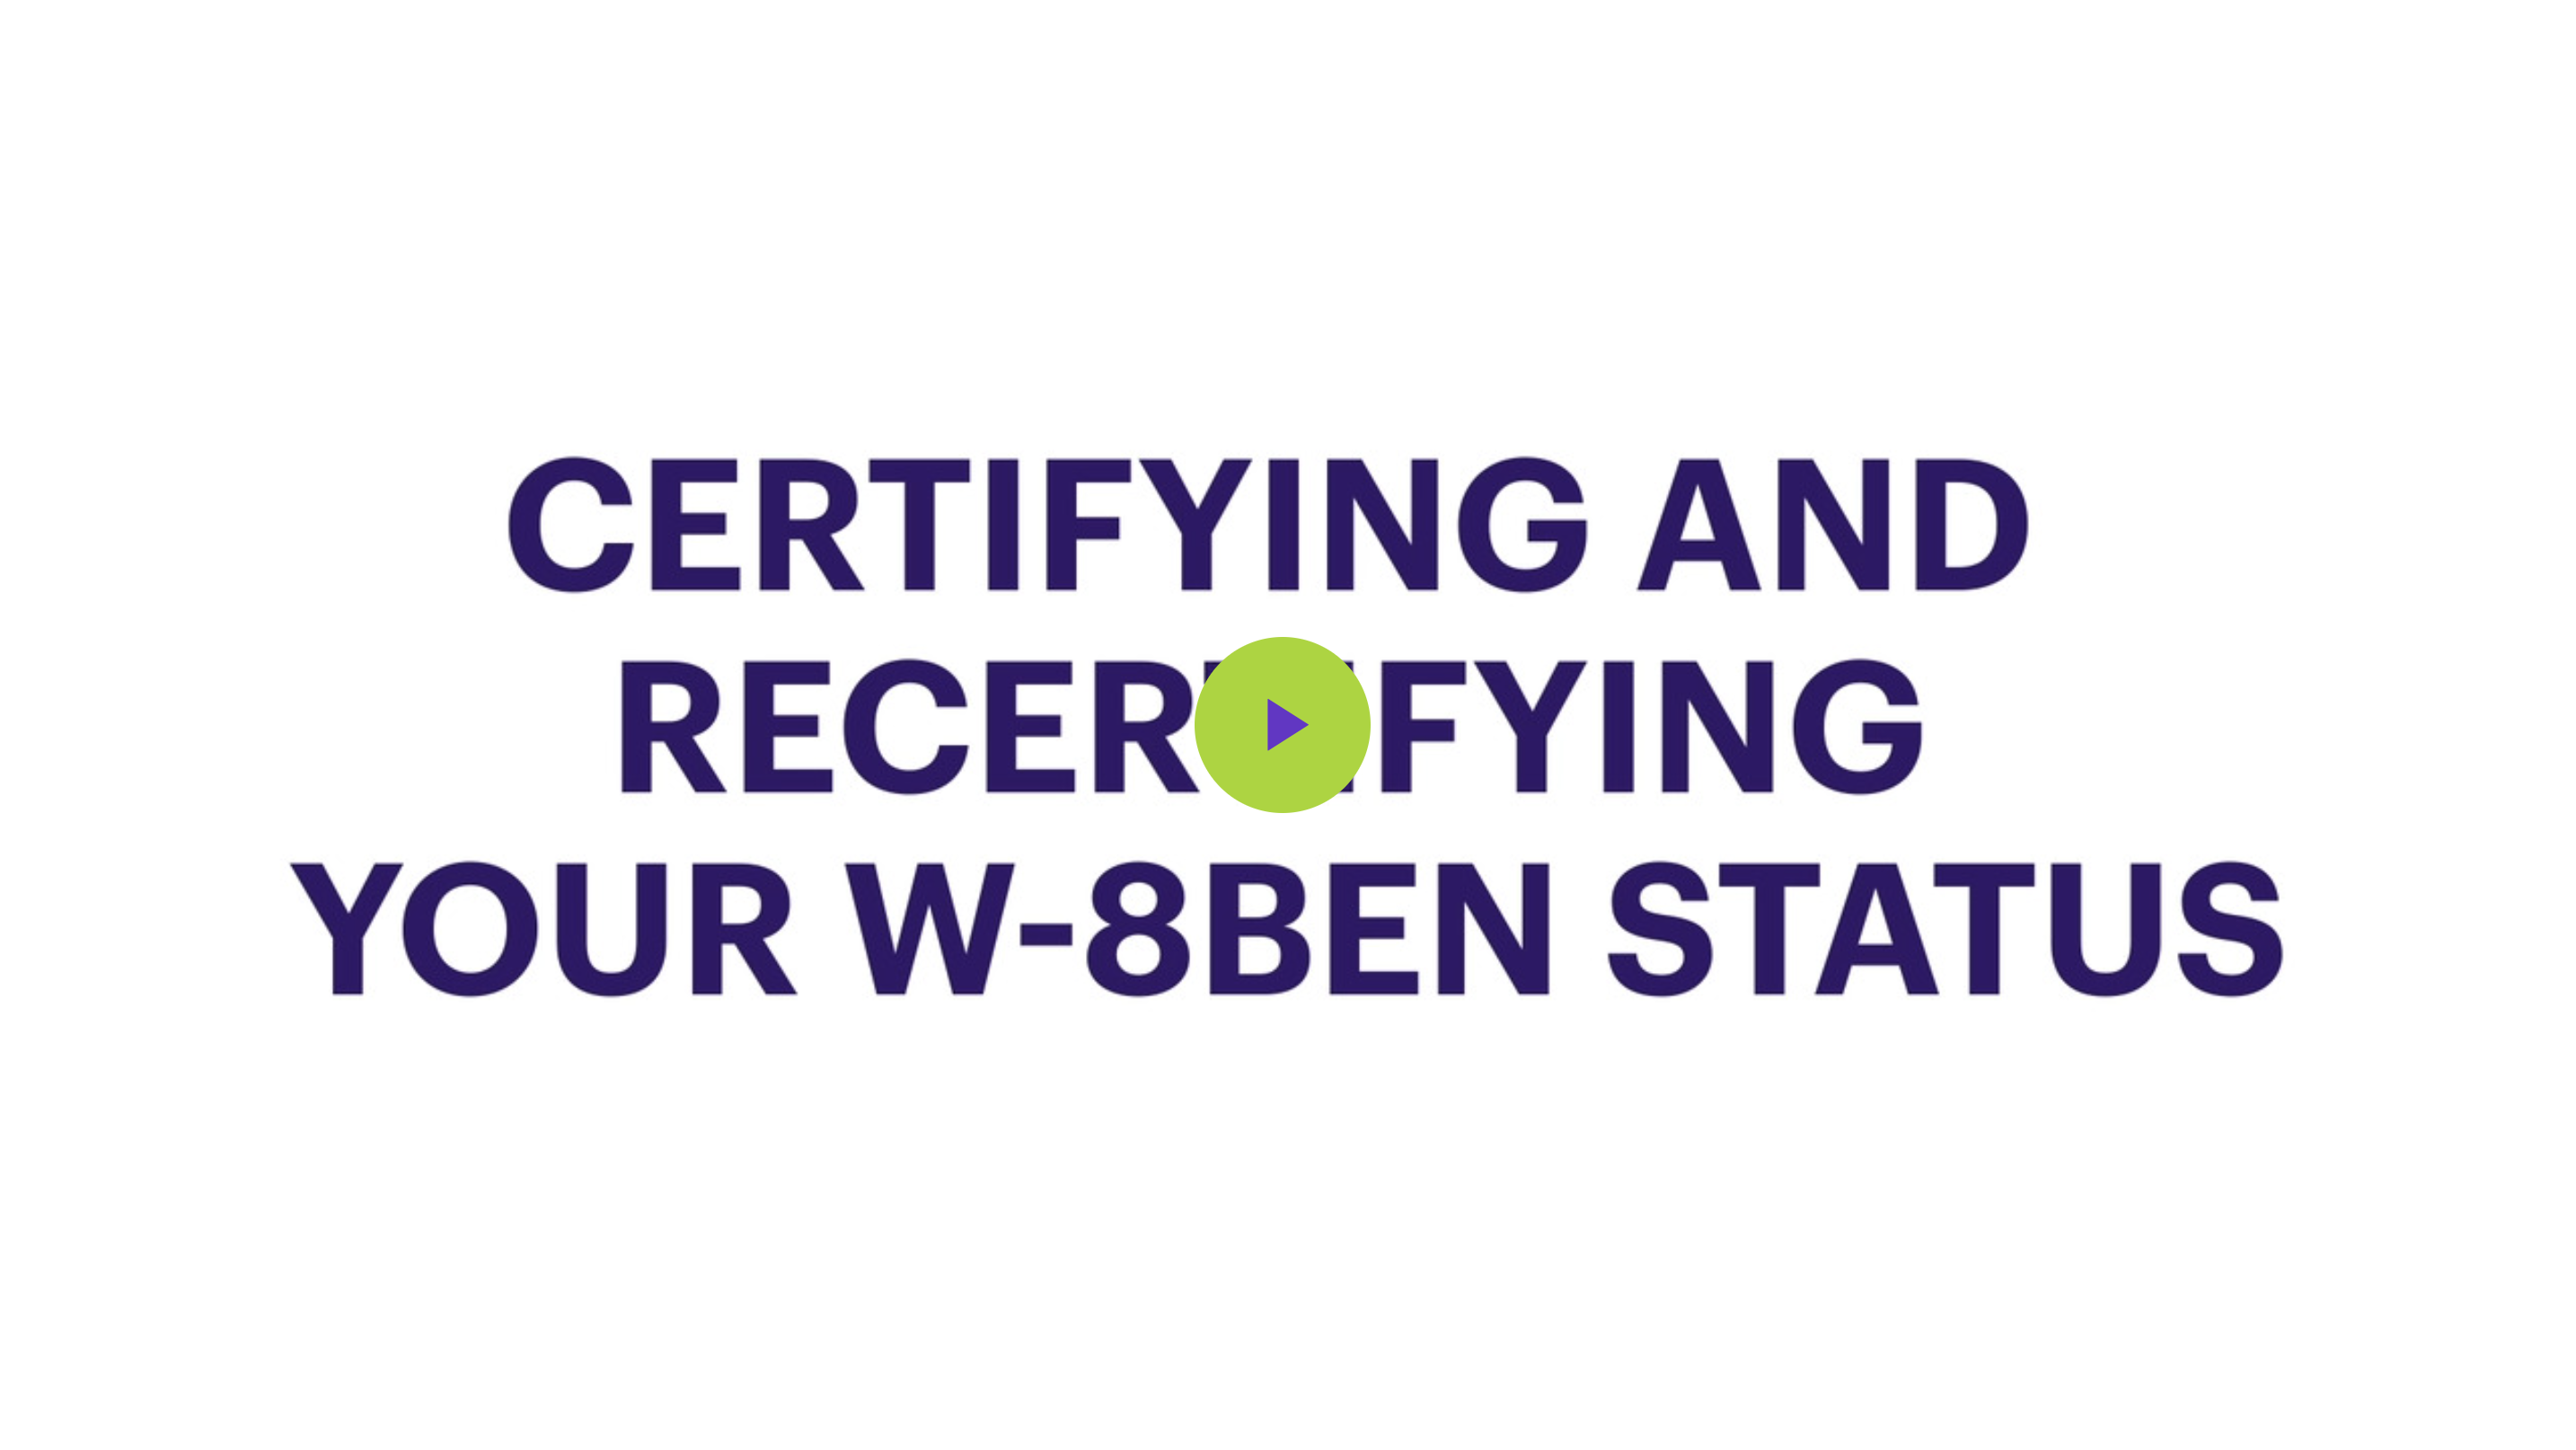 W-8BEN Certification